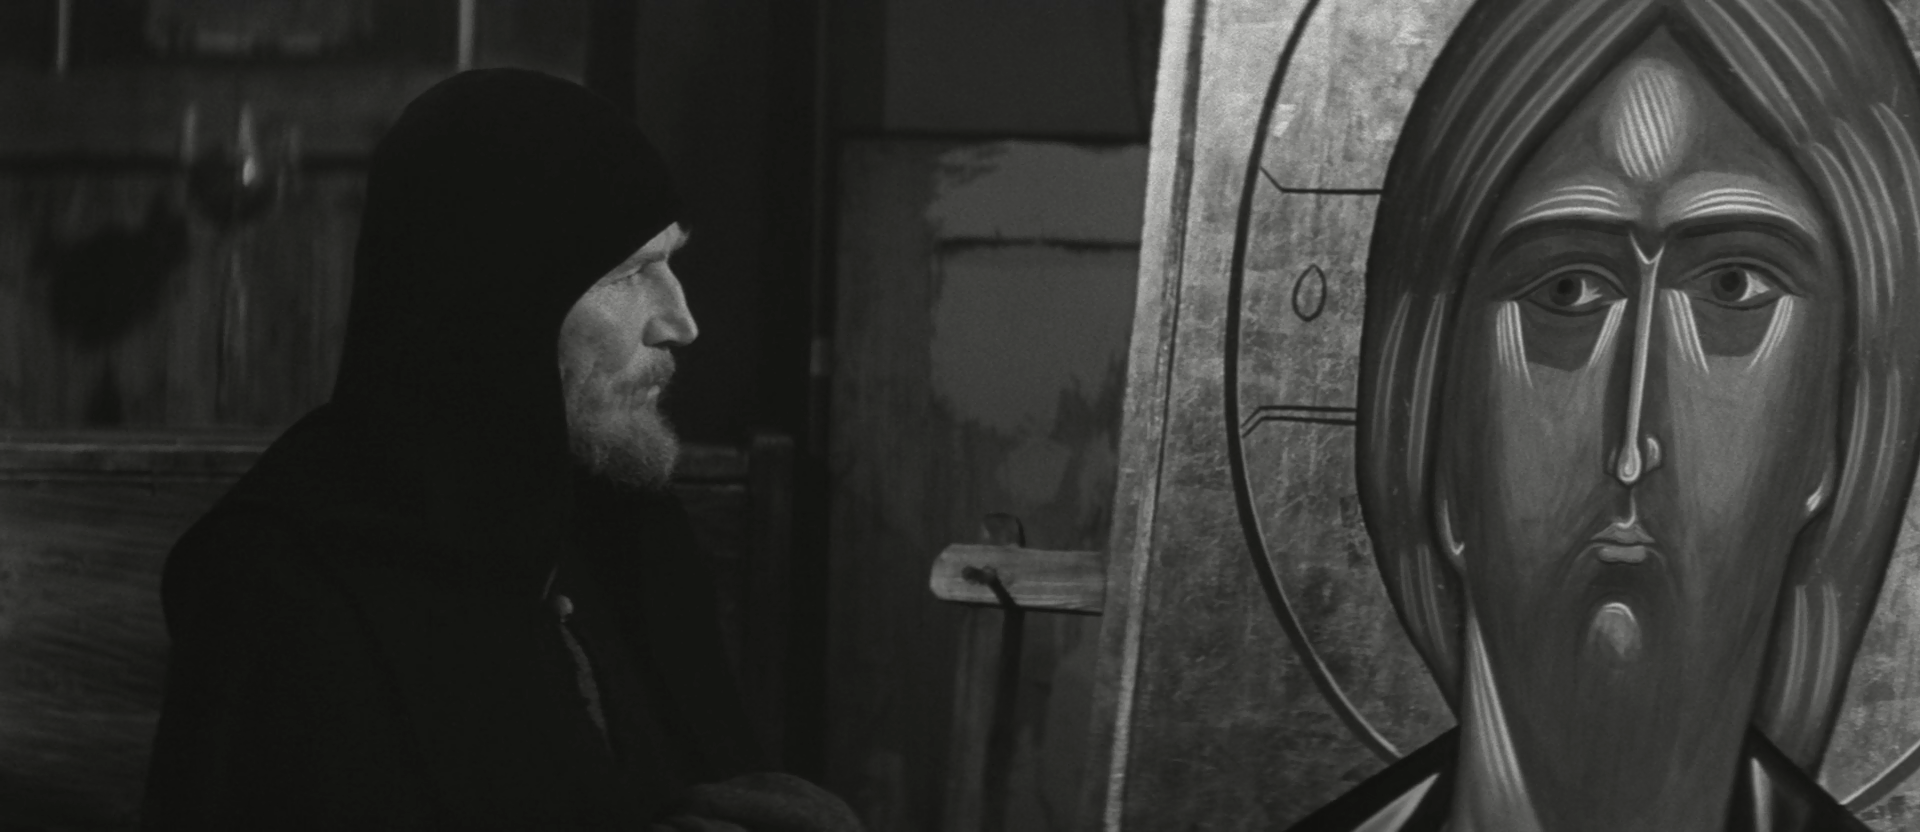 Кадр из фильма "Андрей Рублев", реж. Андрей Тарковский 